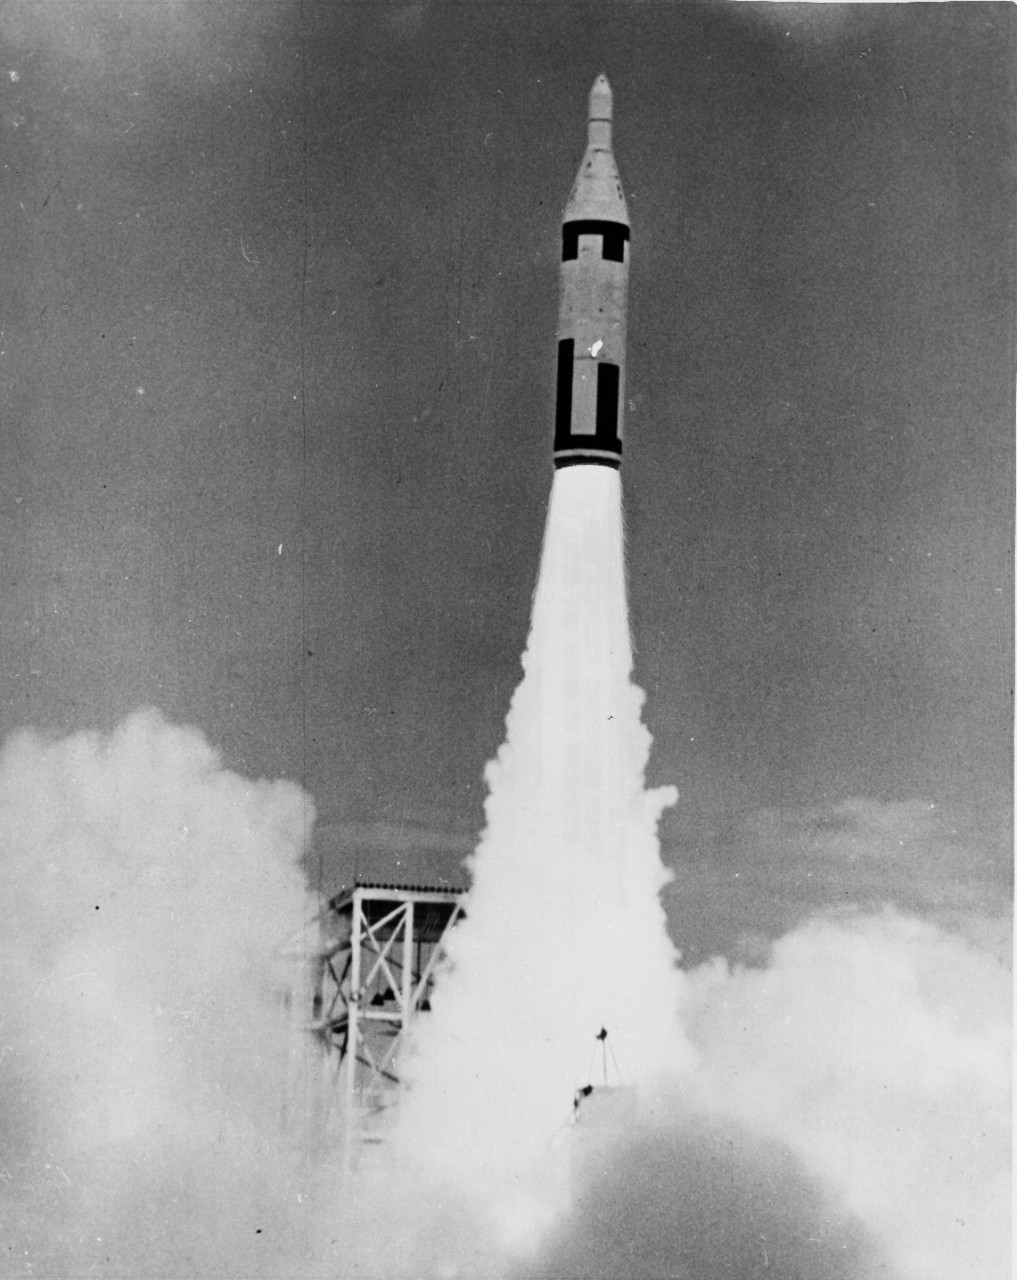 Polaris missile launching